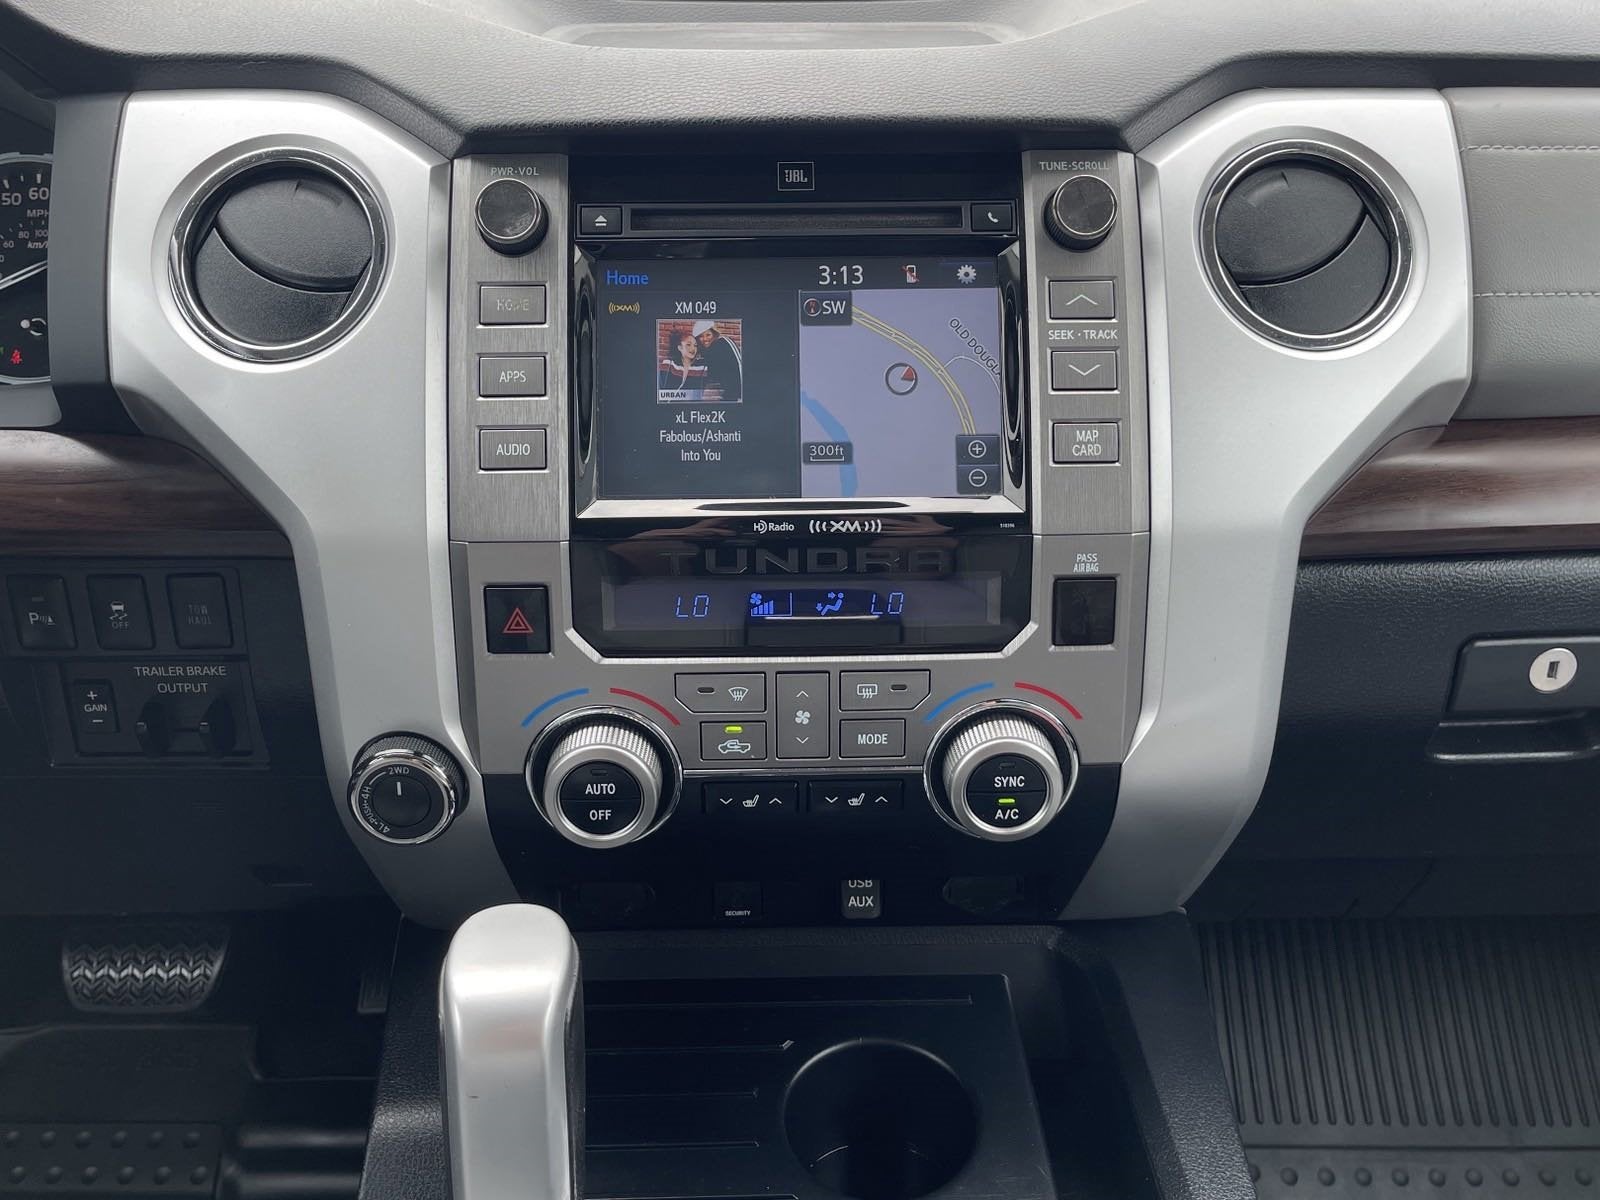 2019 Toyota Tundra 4WD Limited